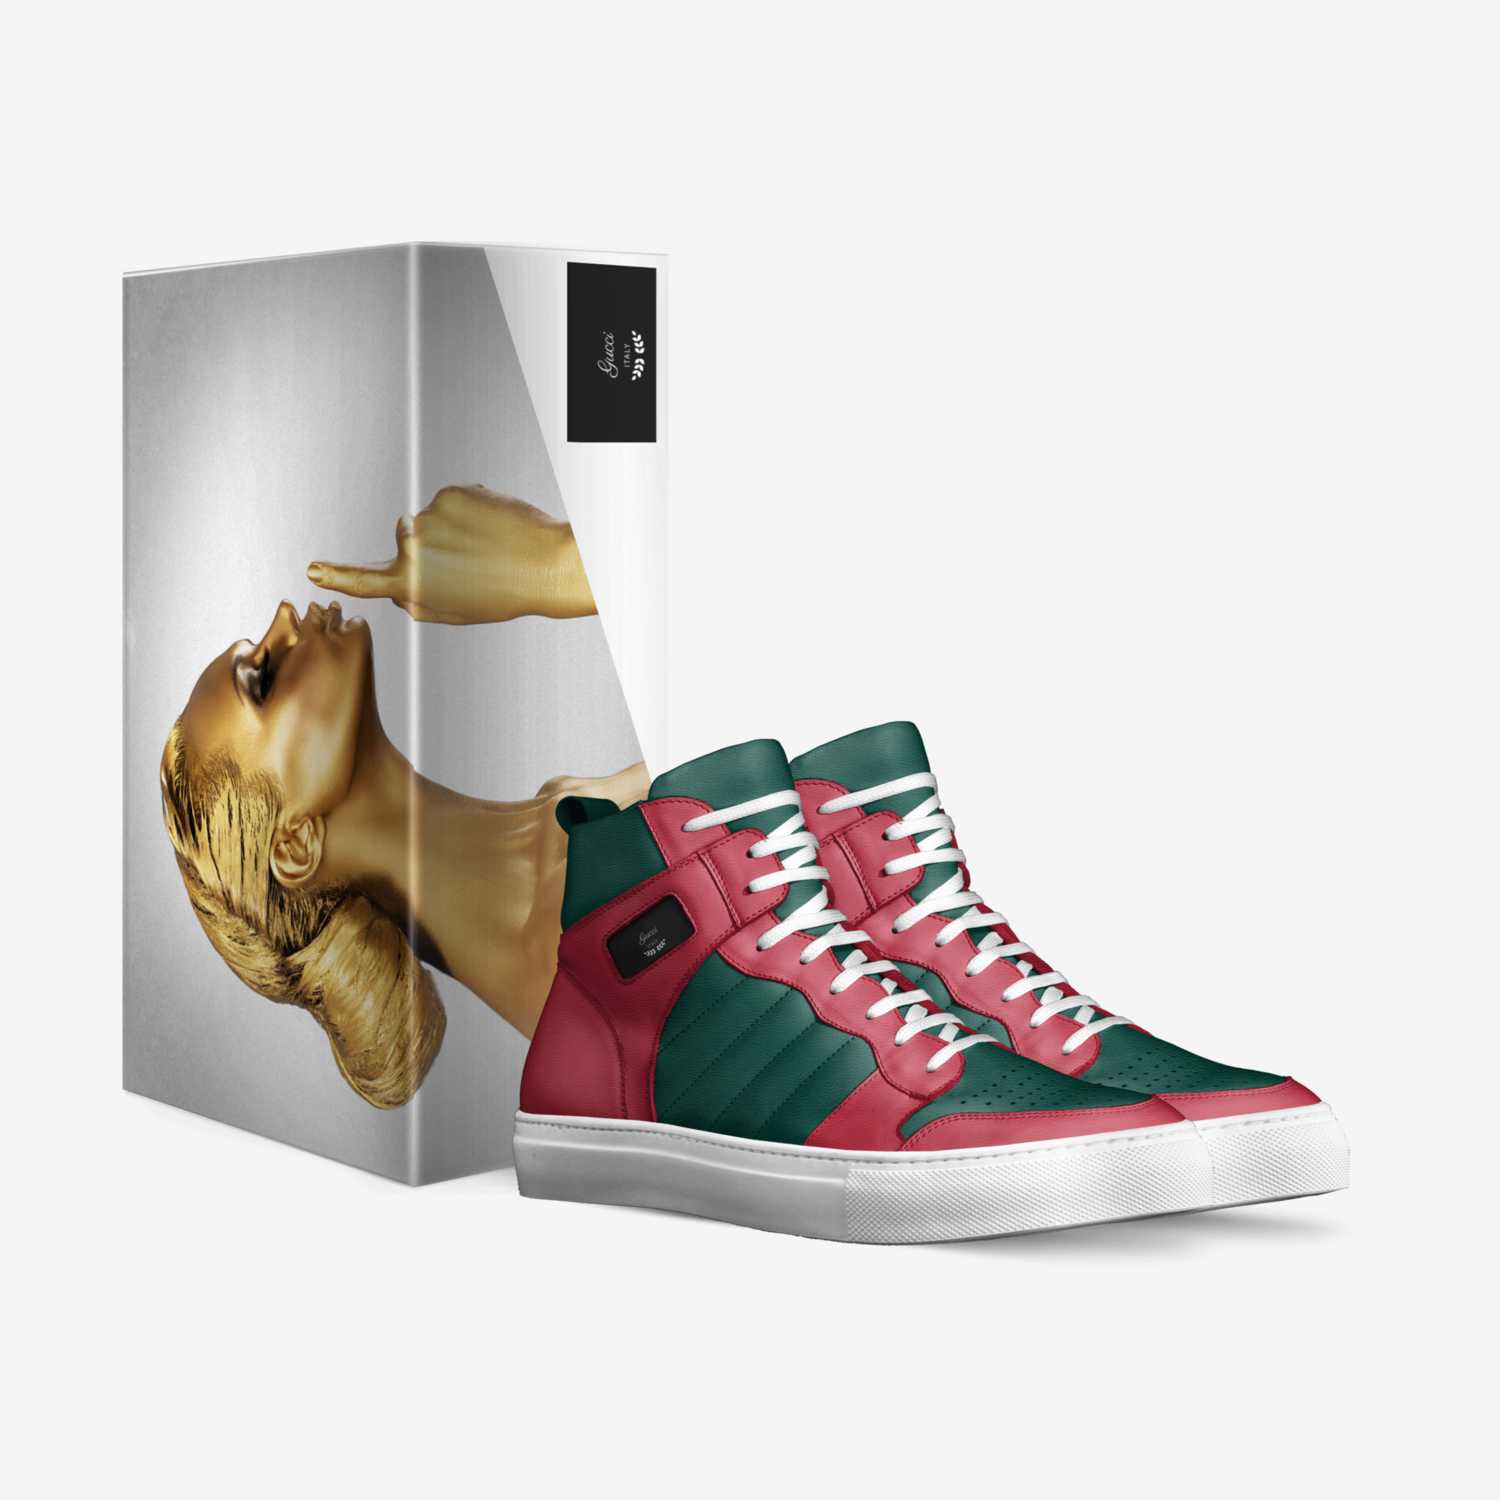 Preme custom made in Italy shoes by Denilson Ramirez | Box view